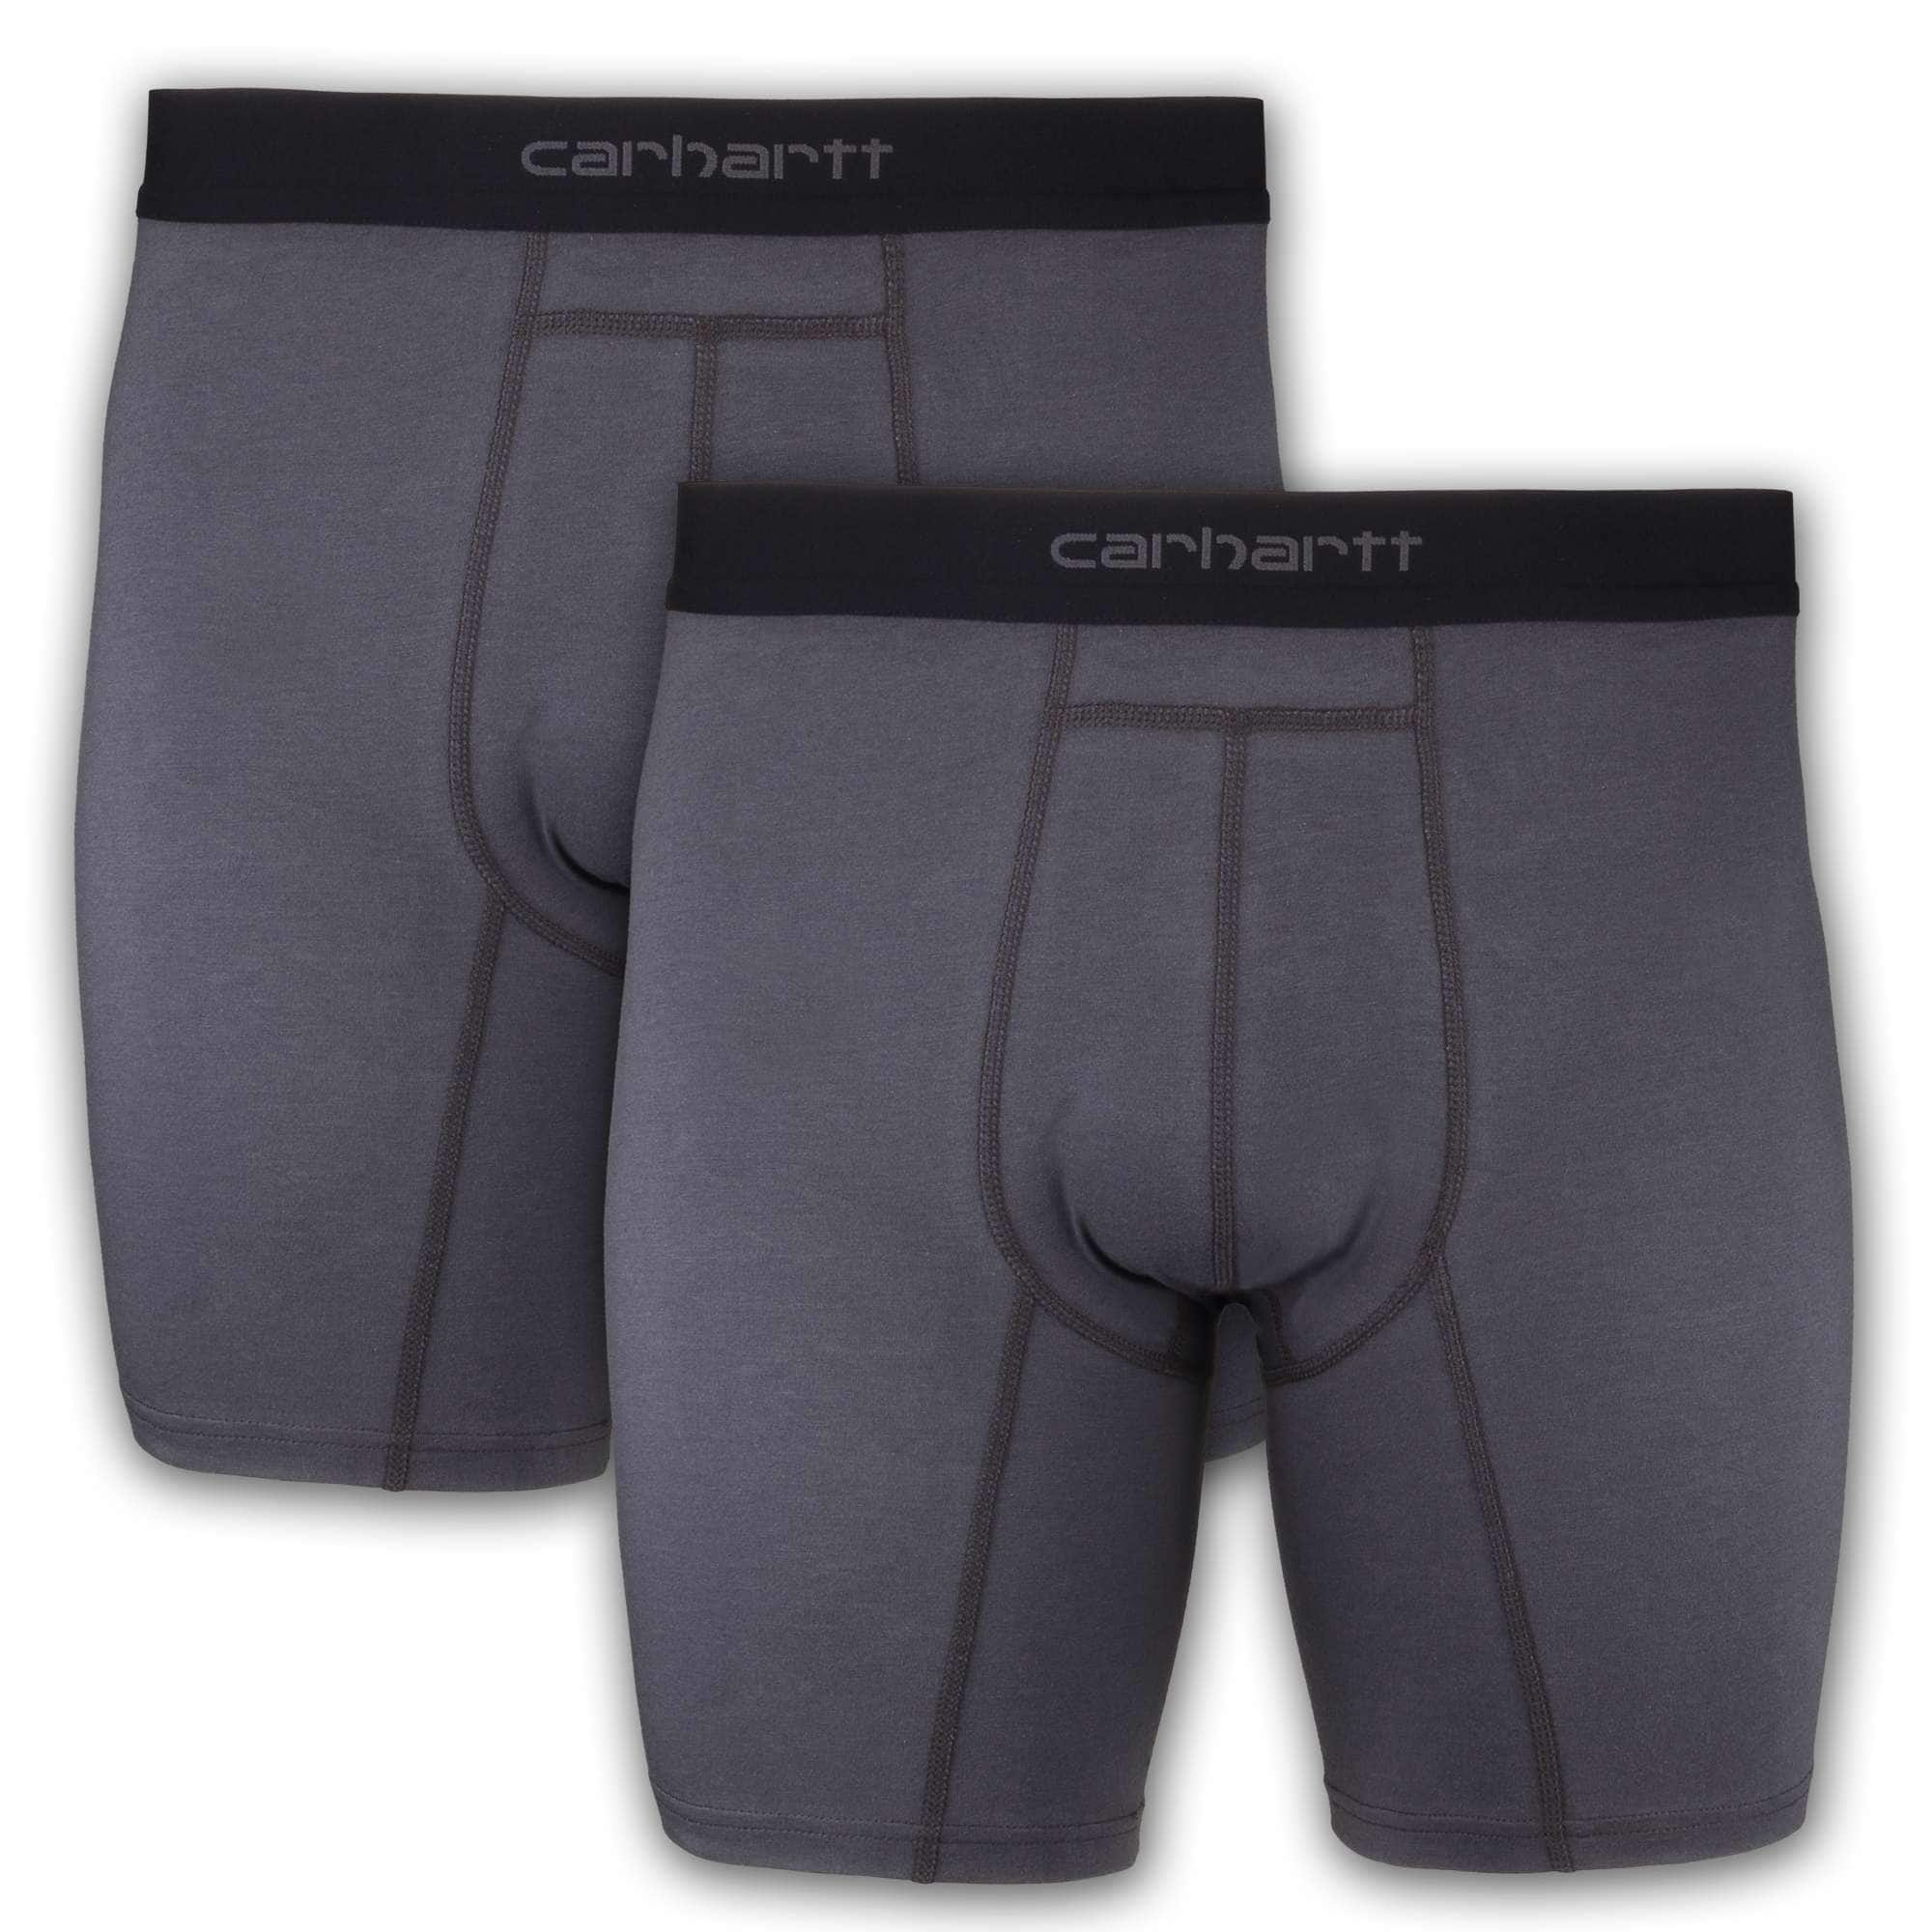 Carhartt, Underwear & Socks, Carhartt Thermal Underwear Mens Size Xlarge